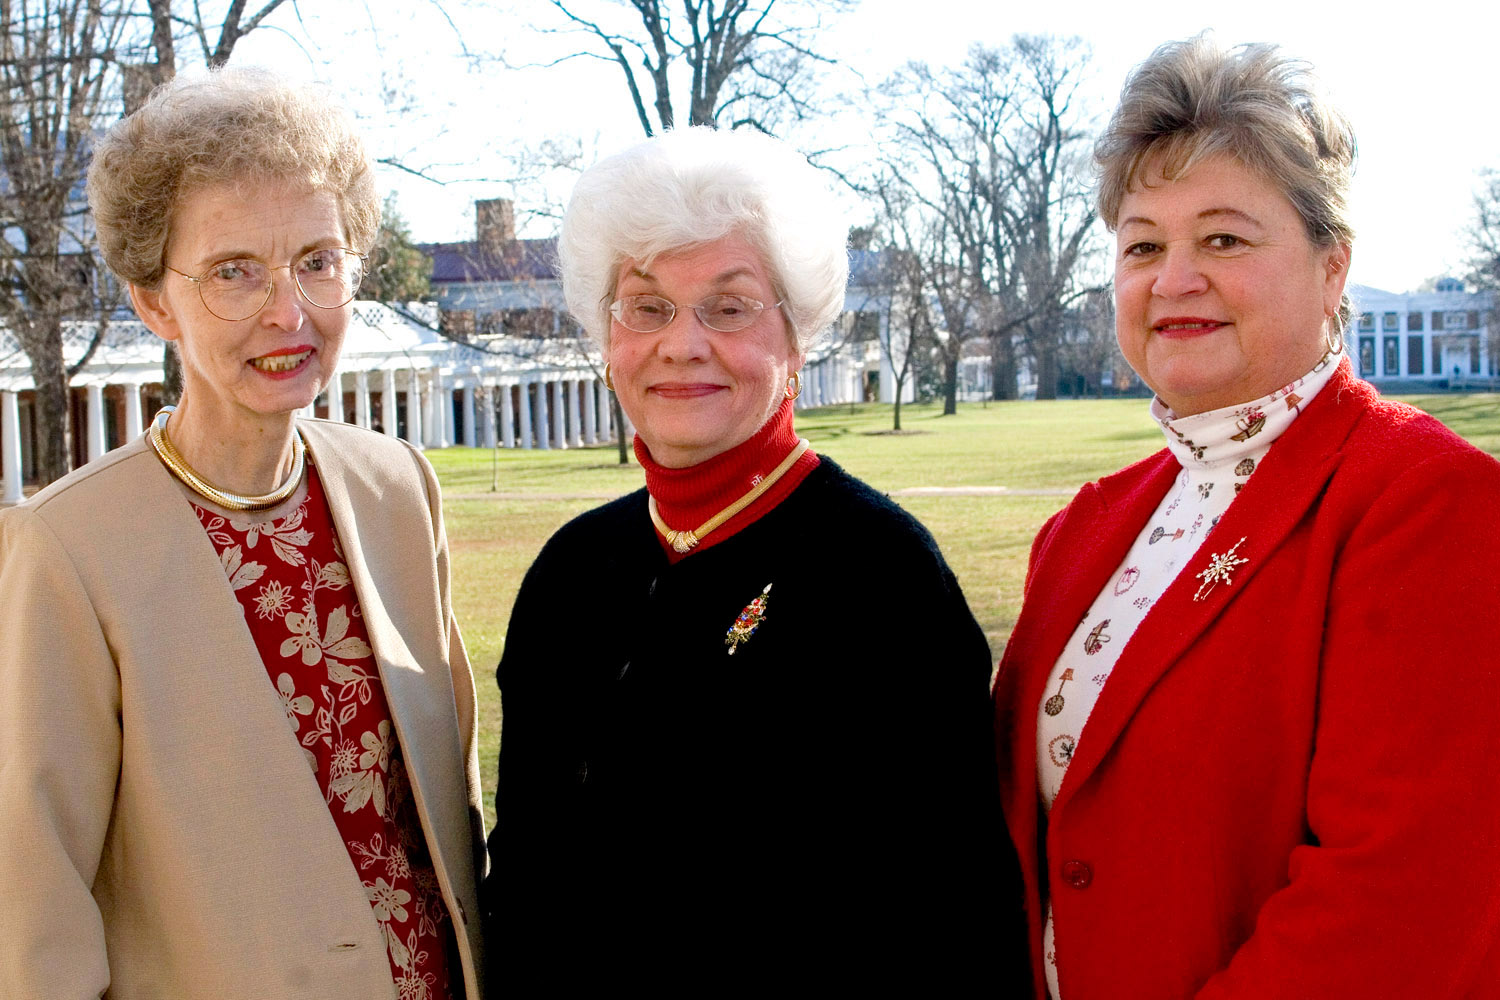 Group photo left to right: Lois Lovern, Jeanne Bailes and Lynda Birckhead